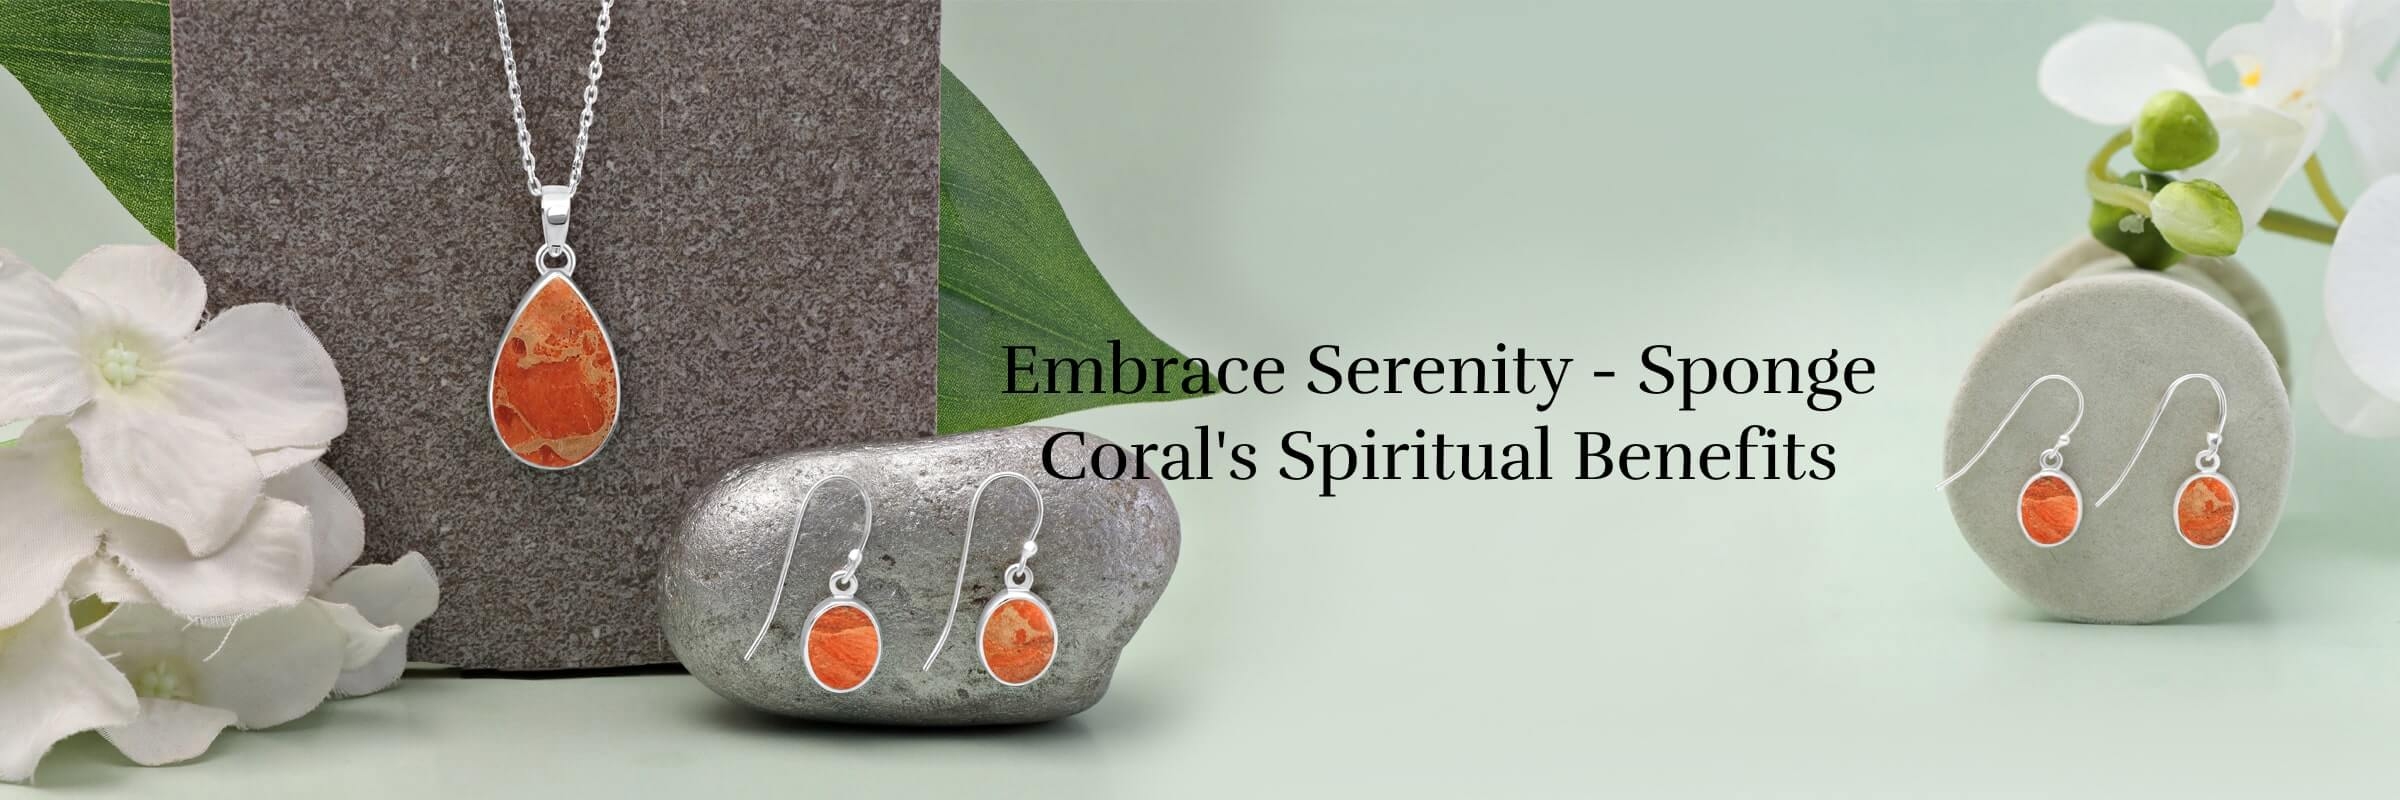 Spiritual Healing Properties Of Sponge Coral